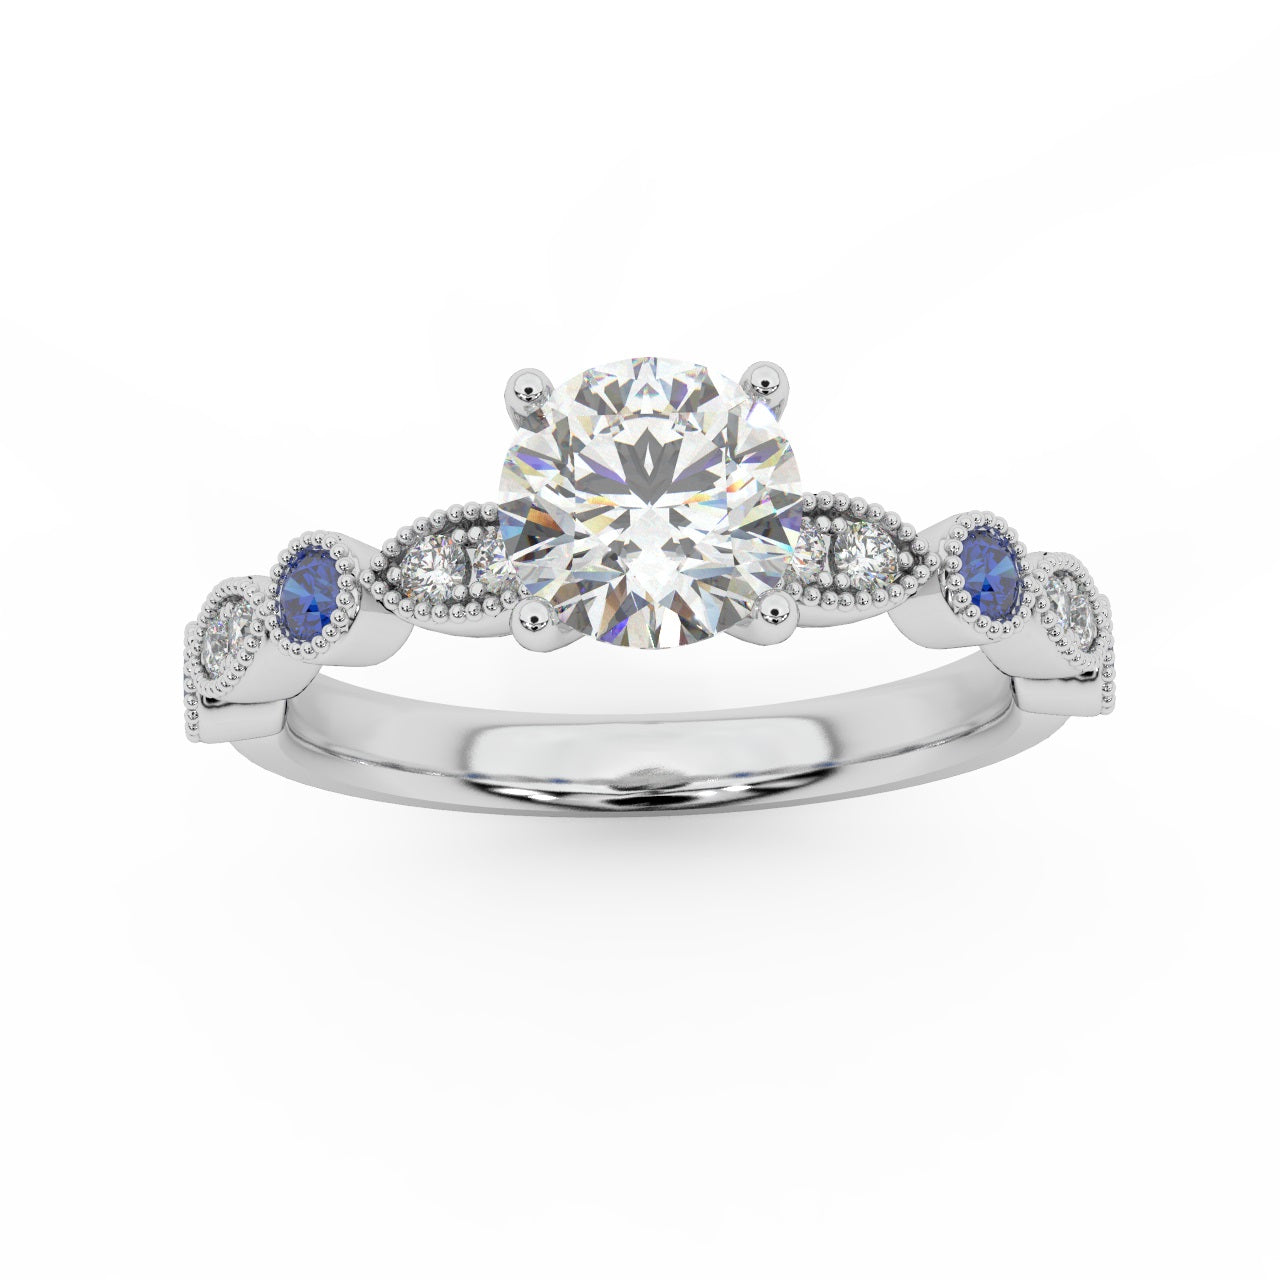 Antique Bezel And Pave Set Diamond Engagement Ring - Miligrain on Edges